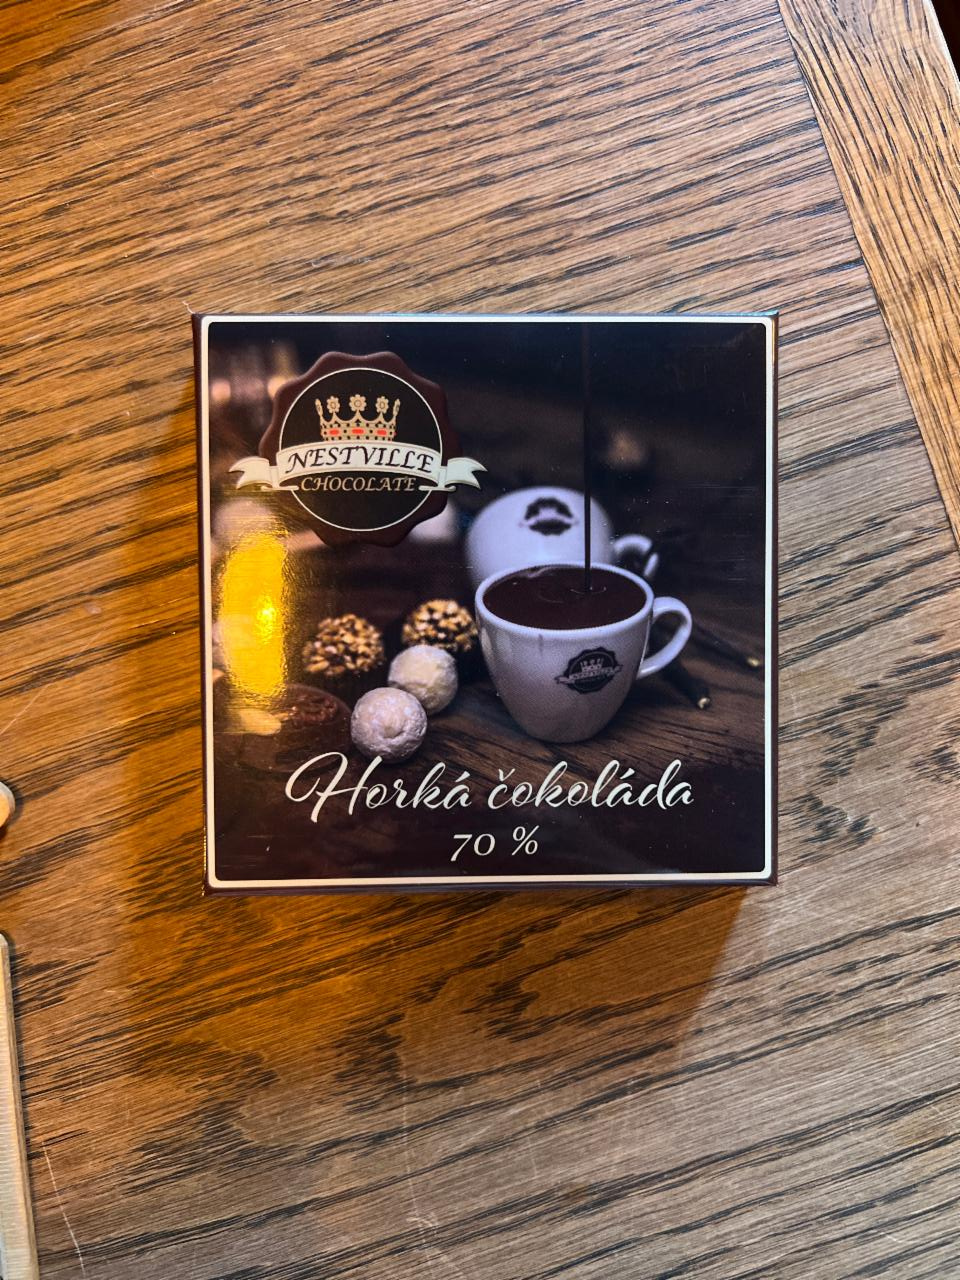 Fotografie - Horka Čokoláda 70% Nestville chocolate